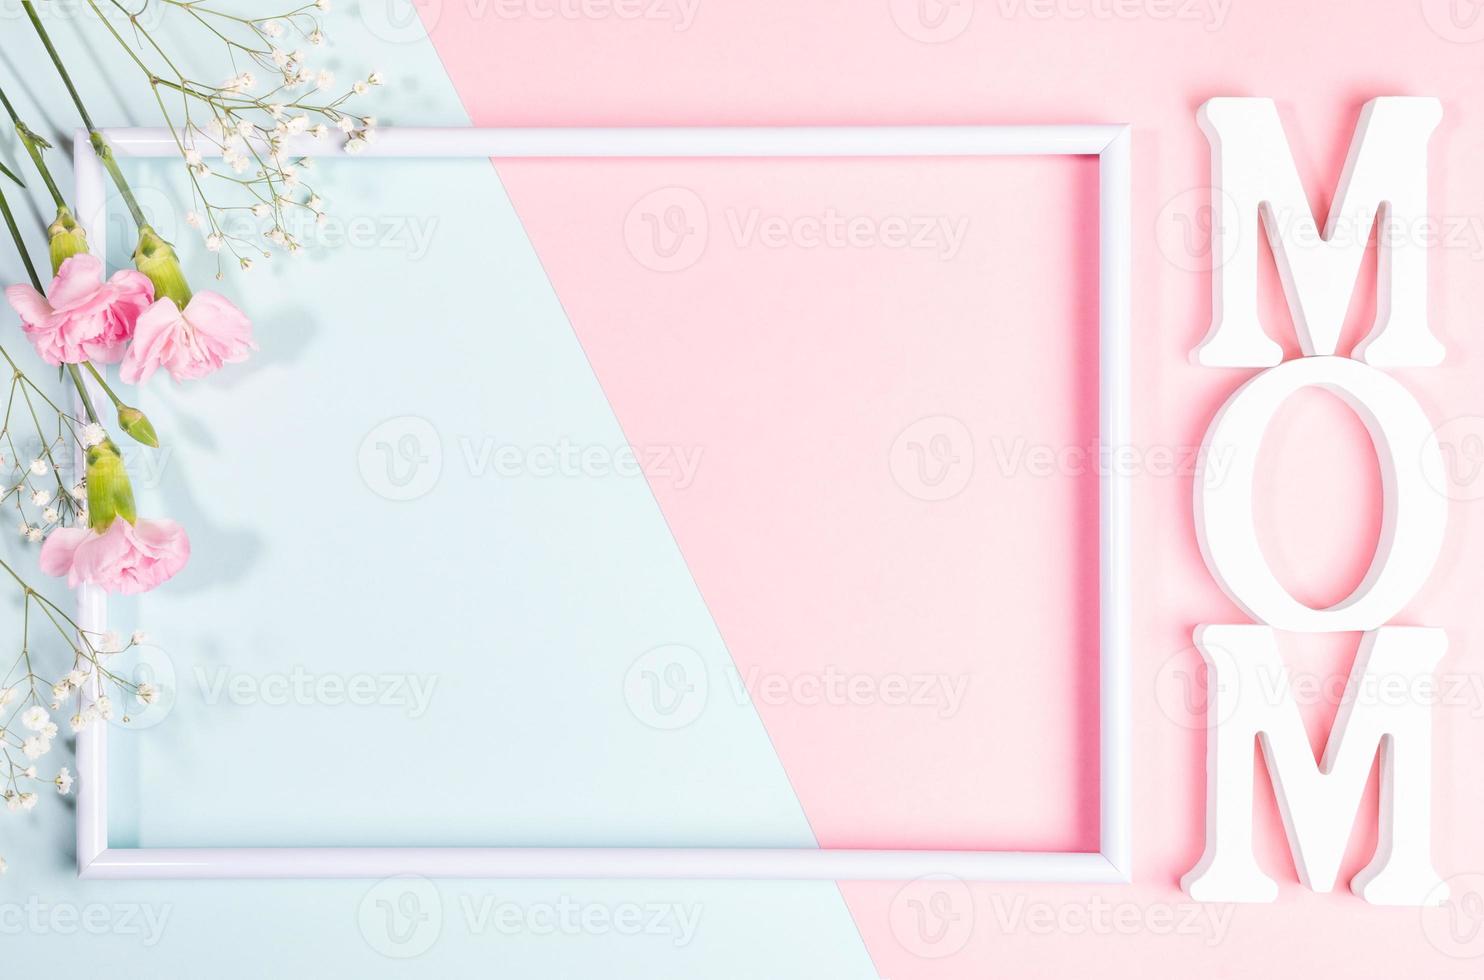 vuoto bianca telaio, rosa garofani e gypsophila fiori, bianca lettere mamma su rosa- blu sfondo. foto